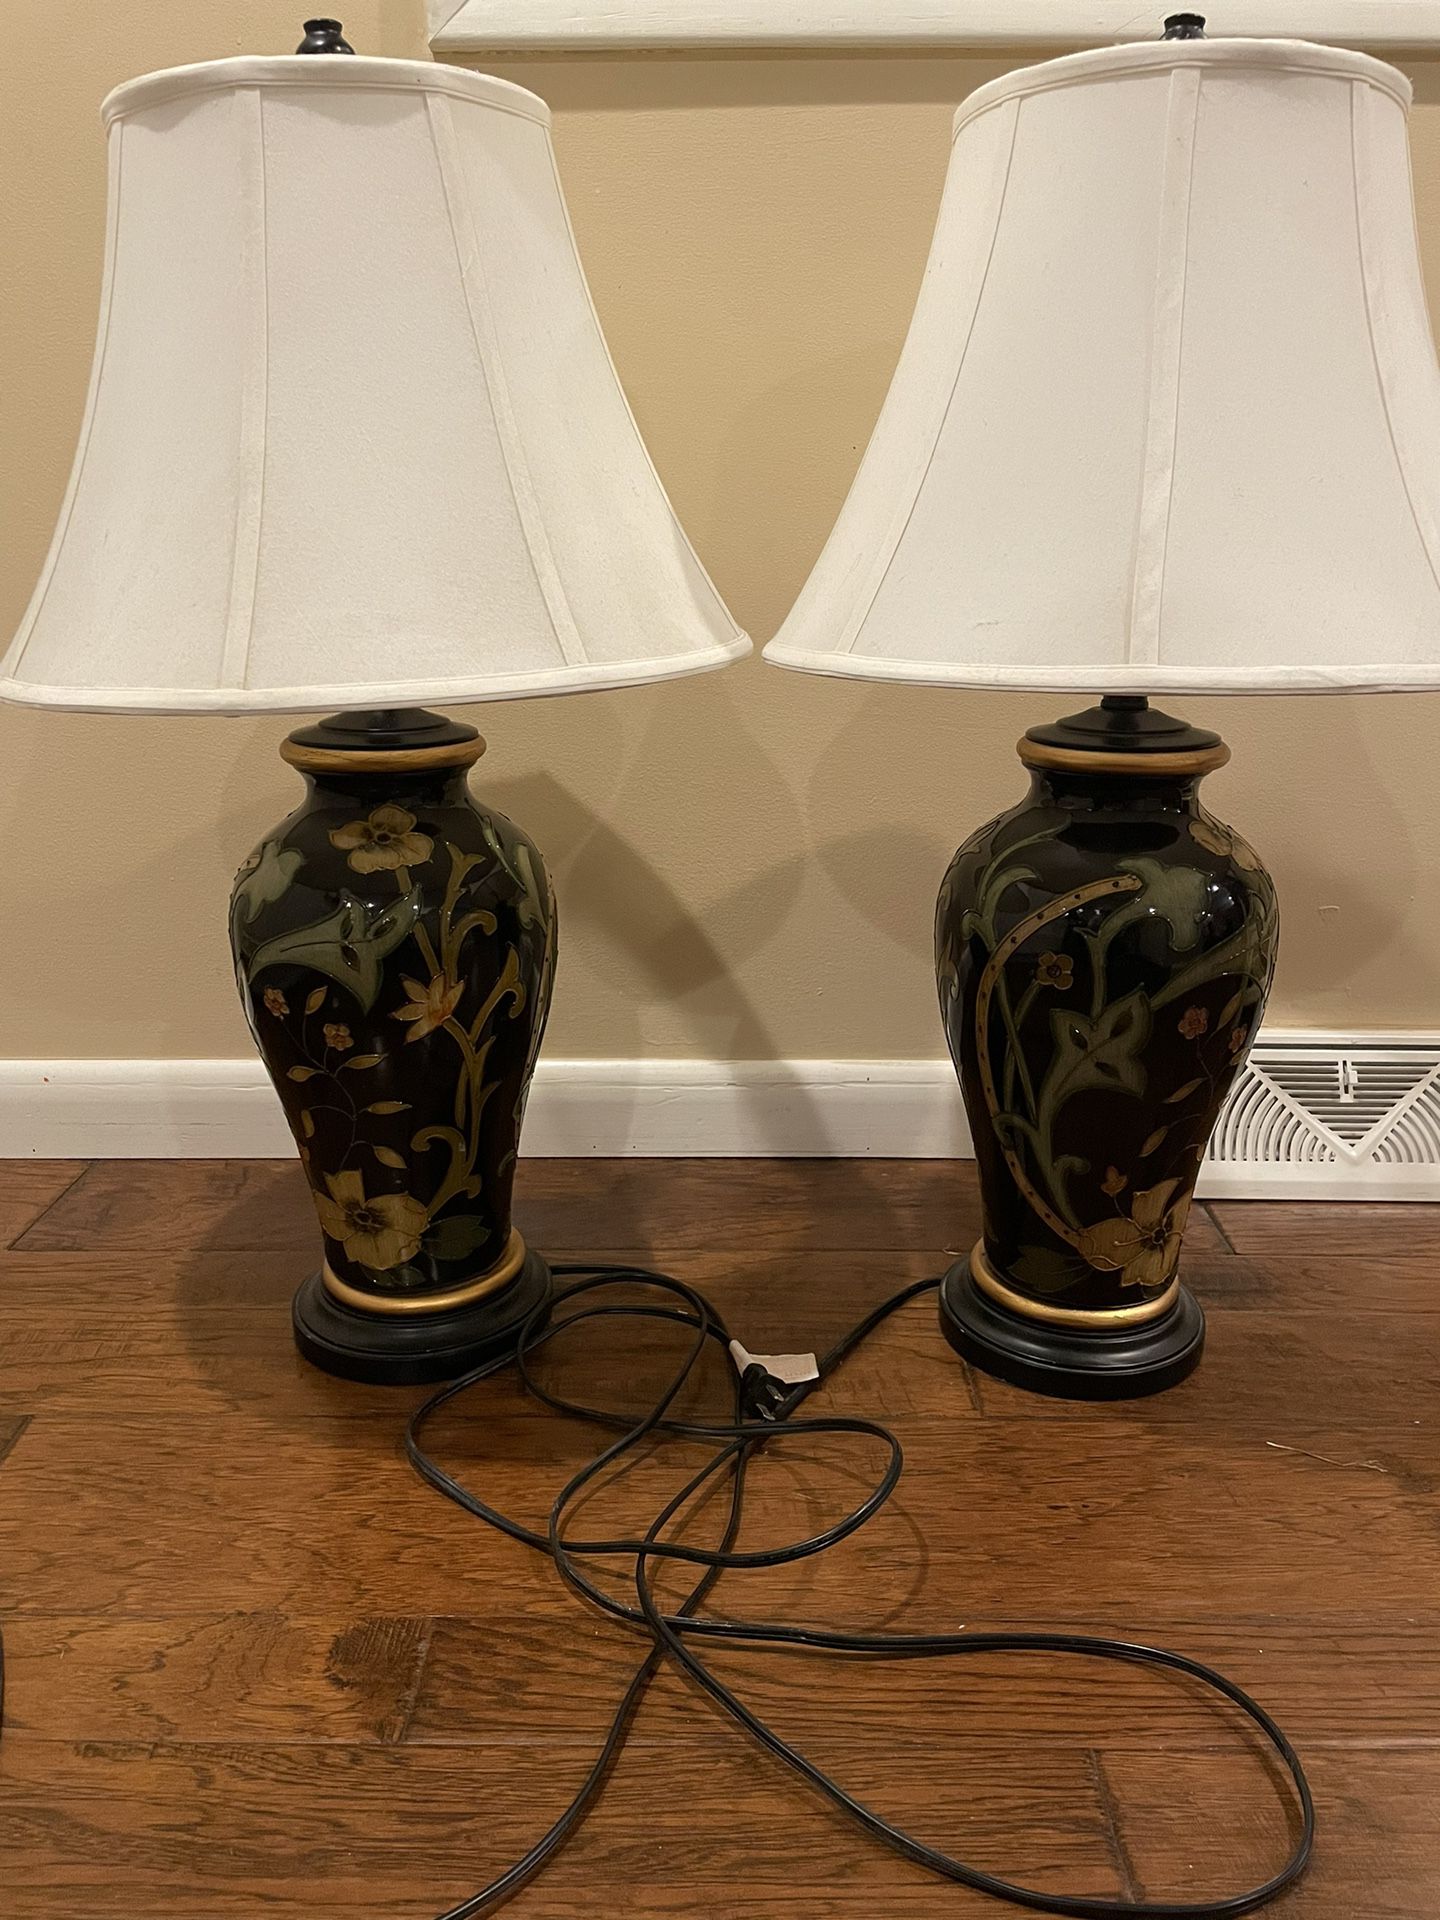 2 matching Decorative Lamps